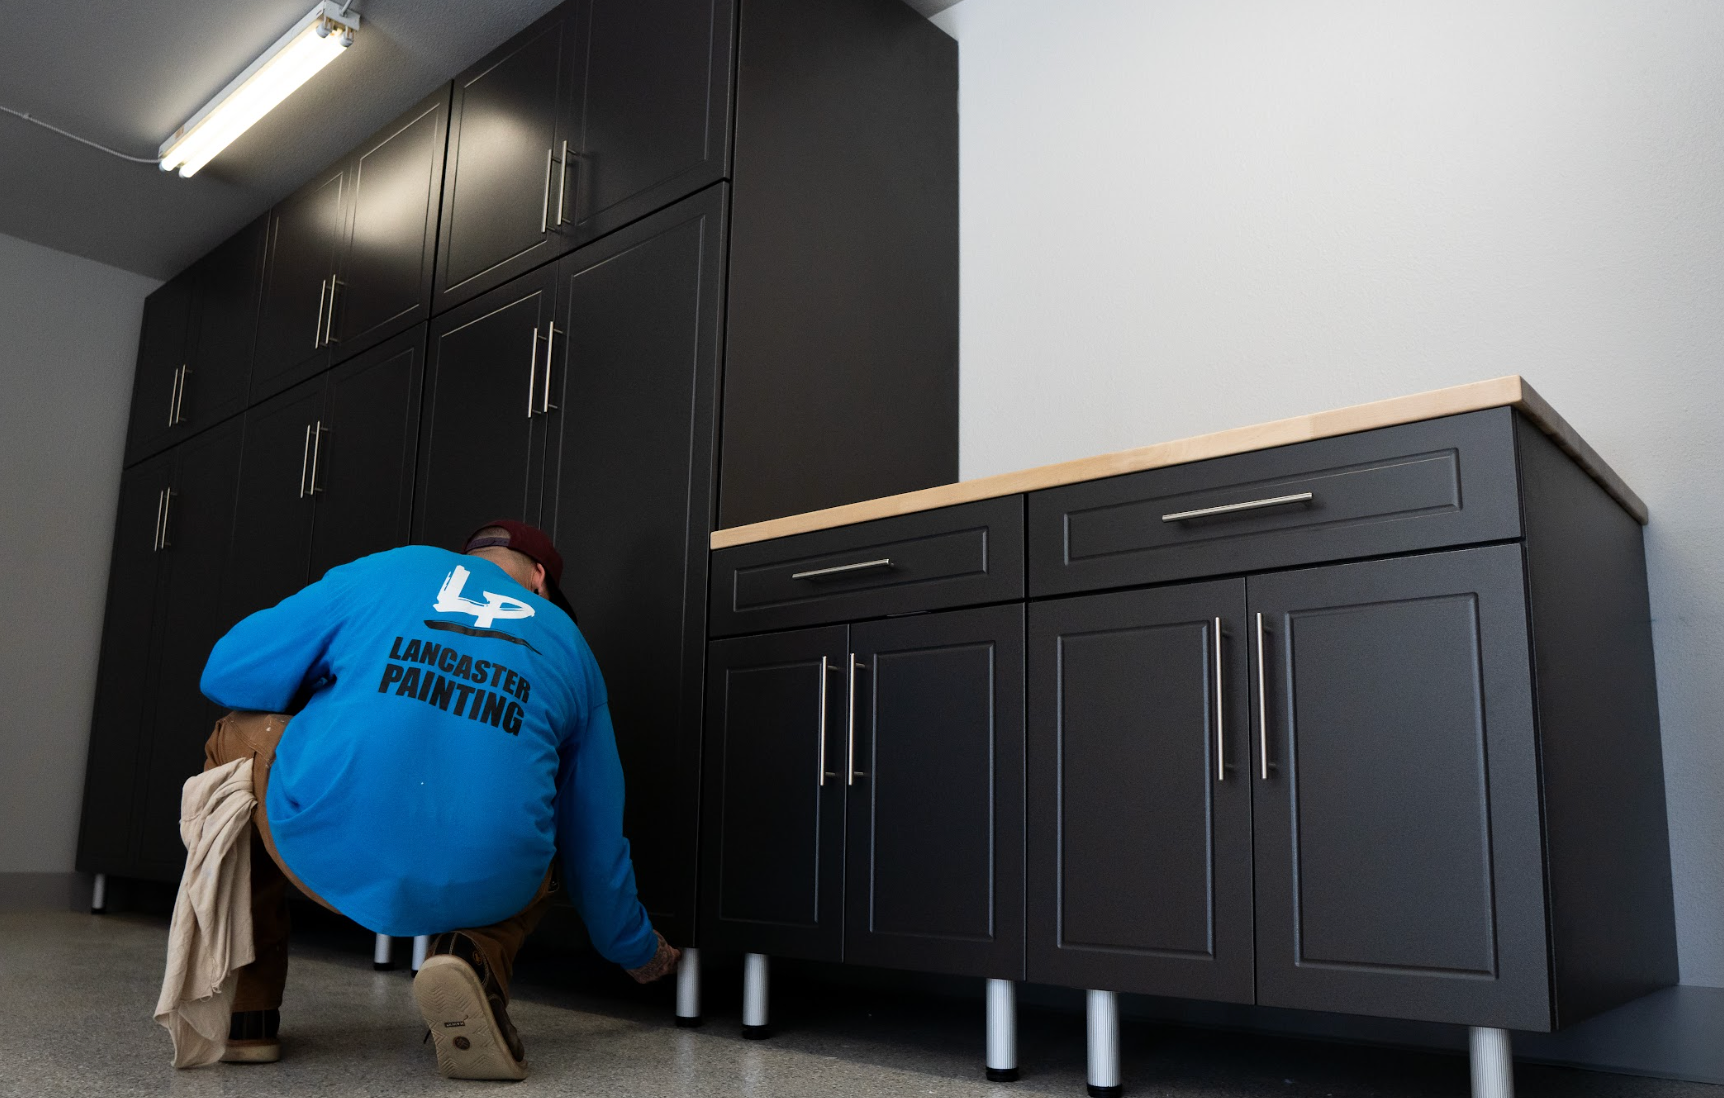 Lancaster Painting installing garage cabinets 